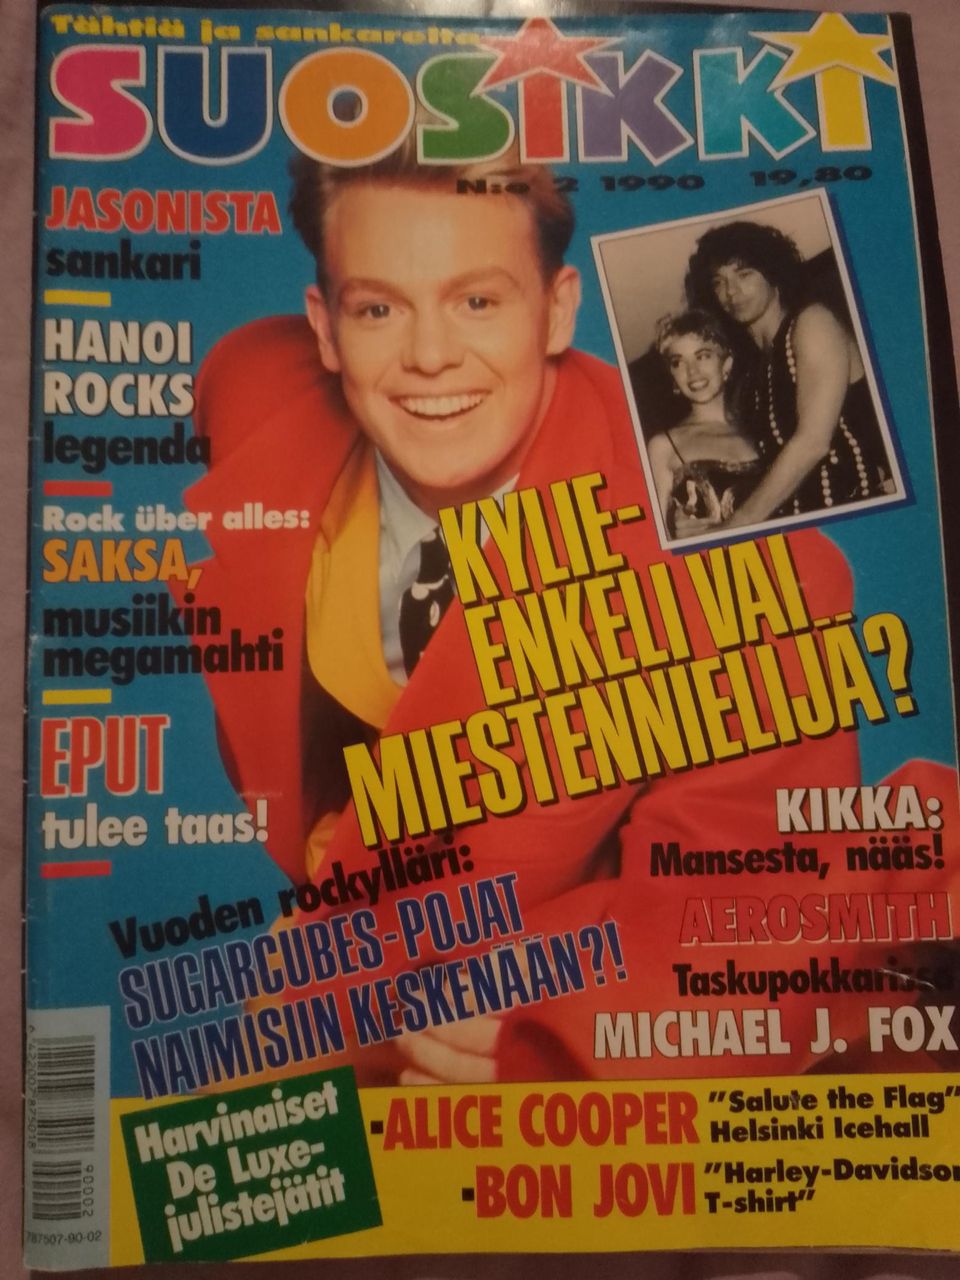 Suosikki 2/1990